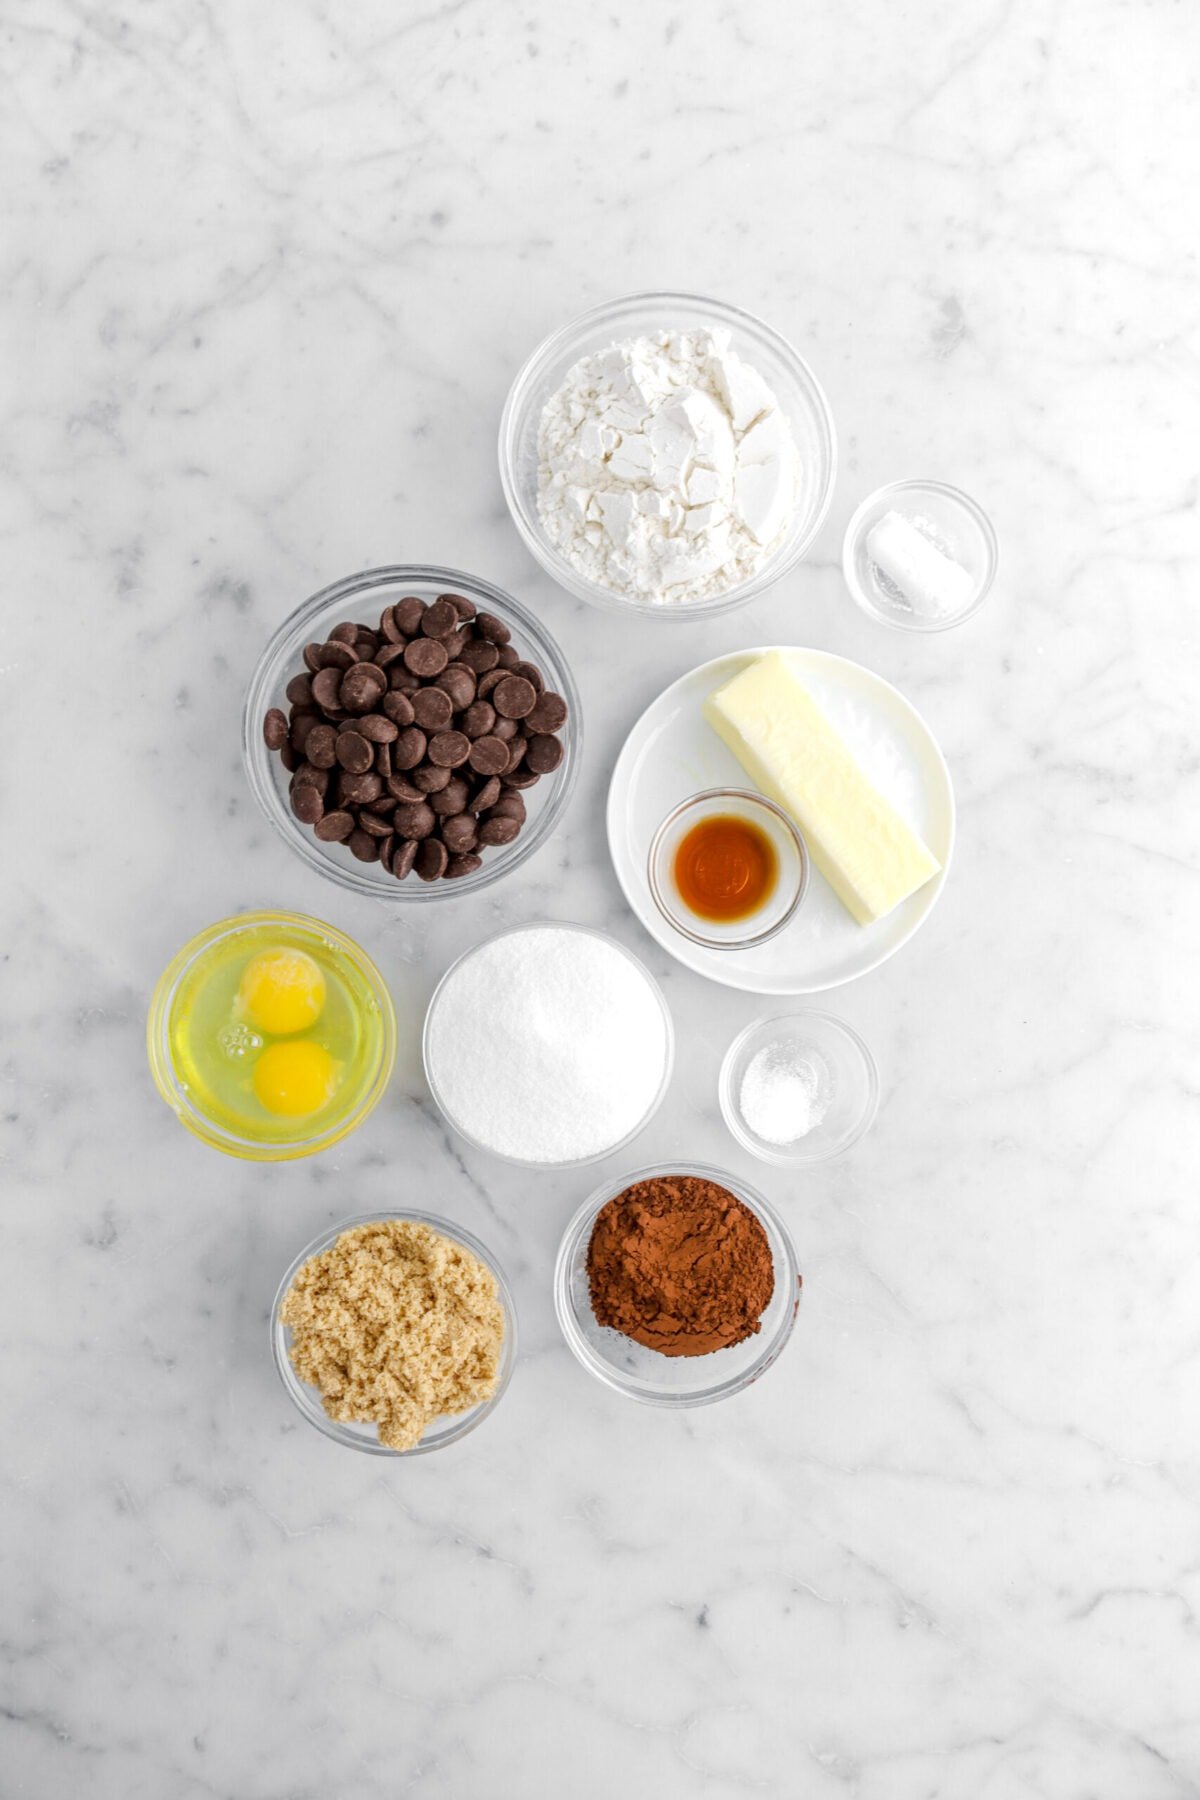 flour, baking powder, chocolate chips, butter, vanilla, sugar, salt, eggs, brown sugar, and cocoa powder on marble surface.